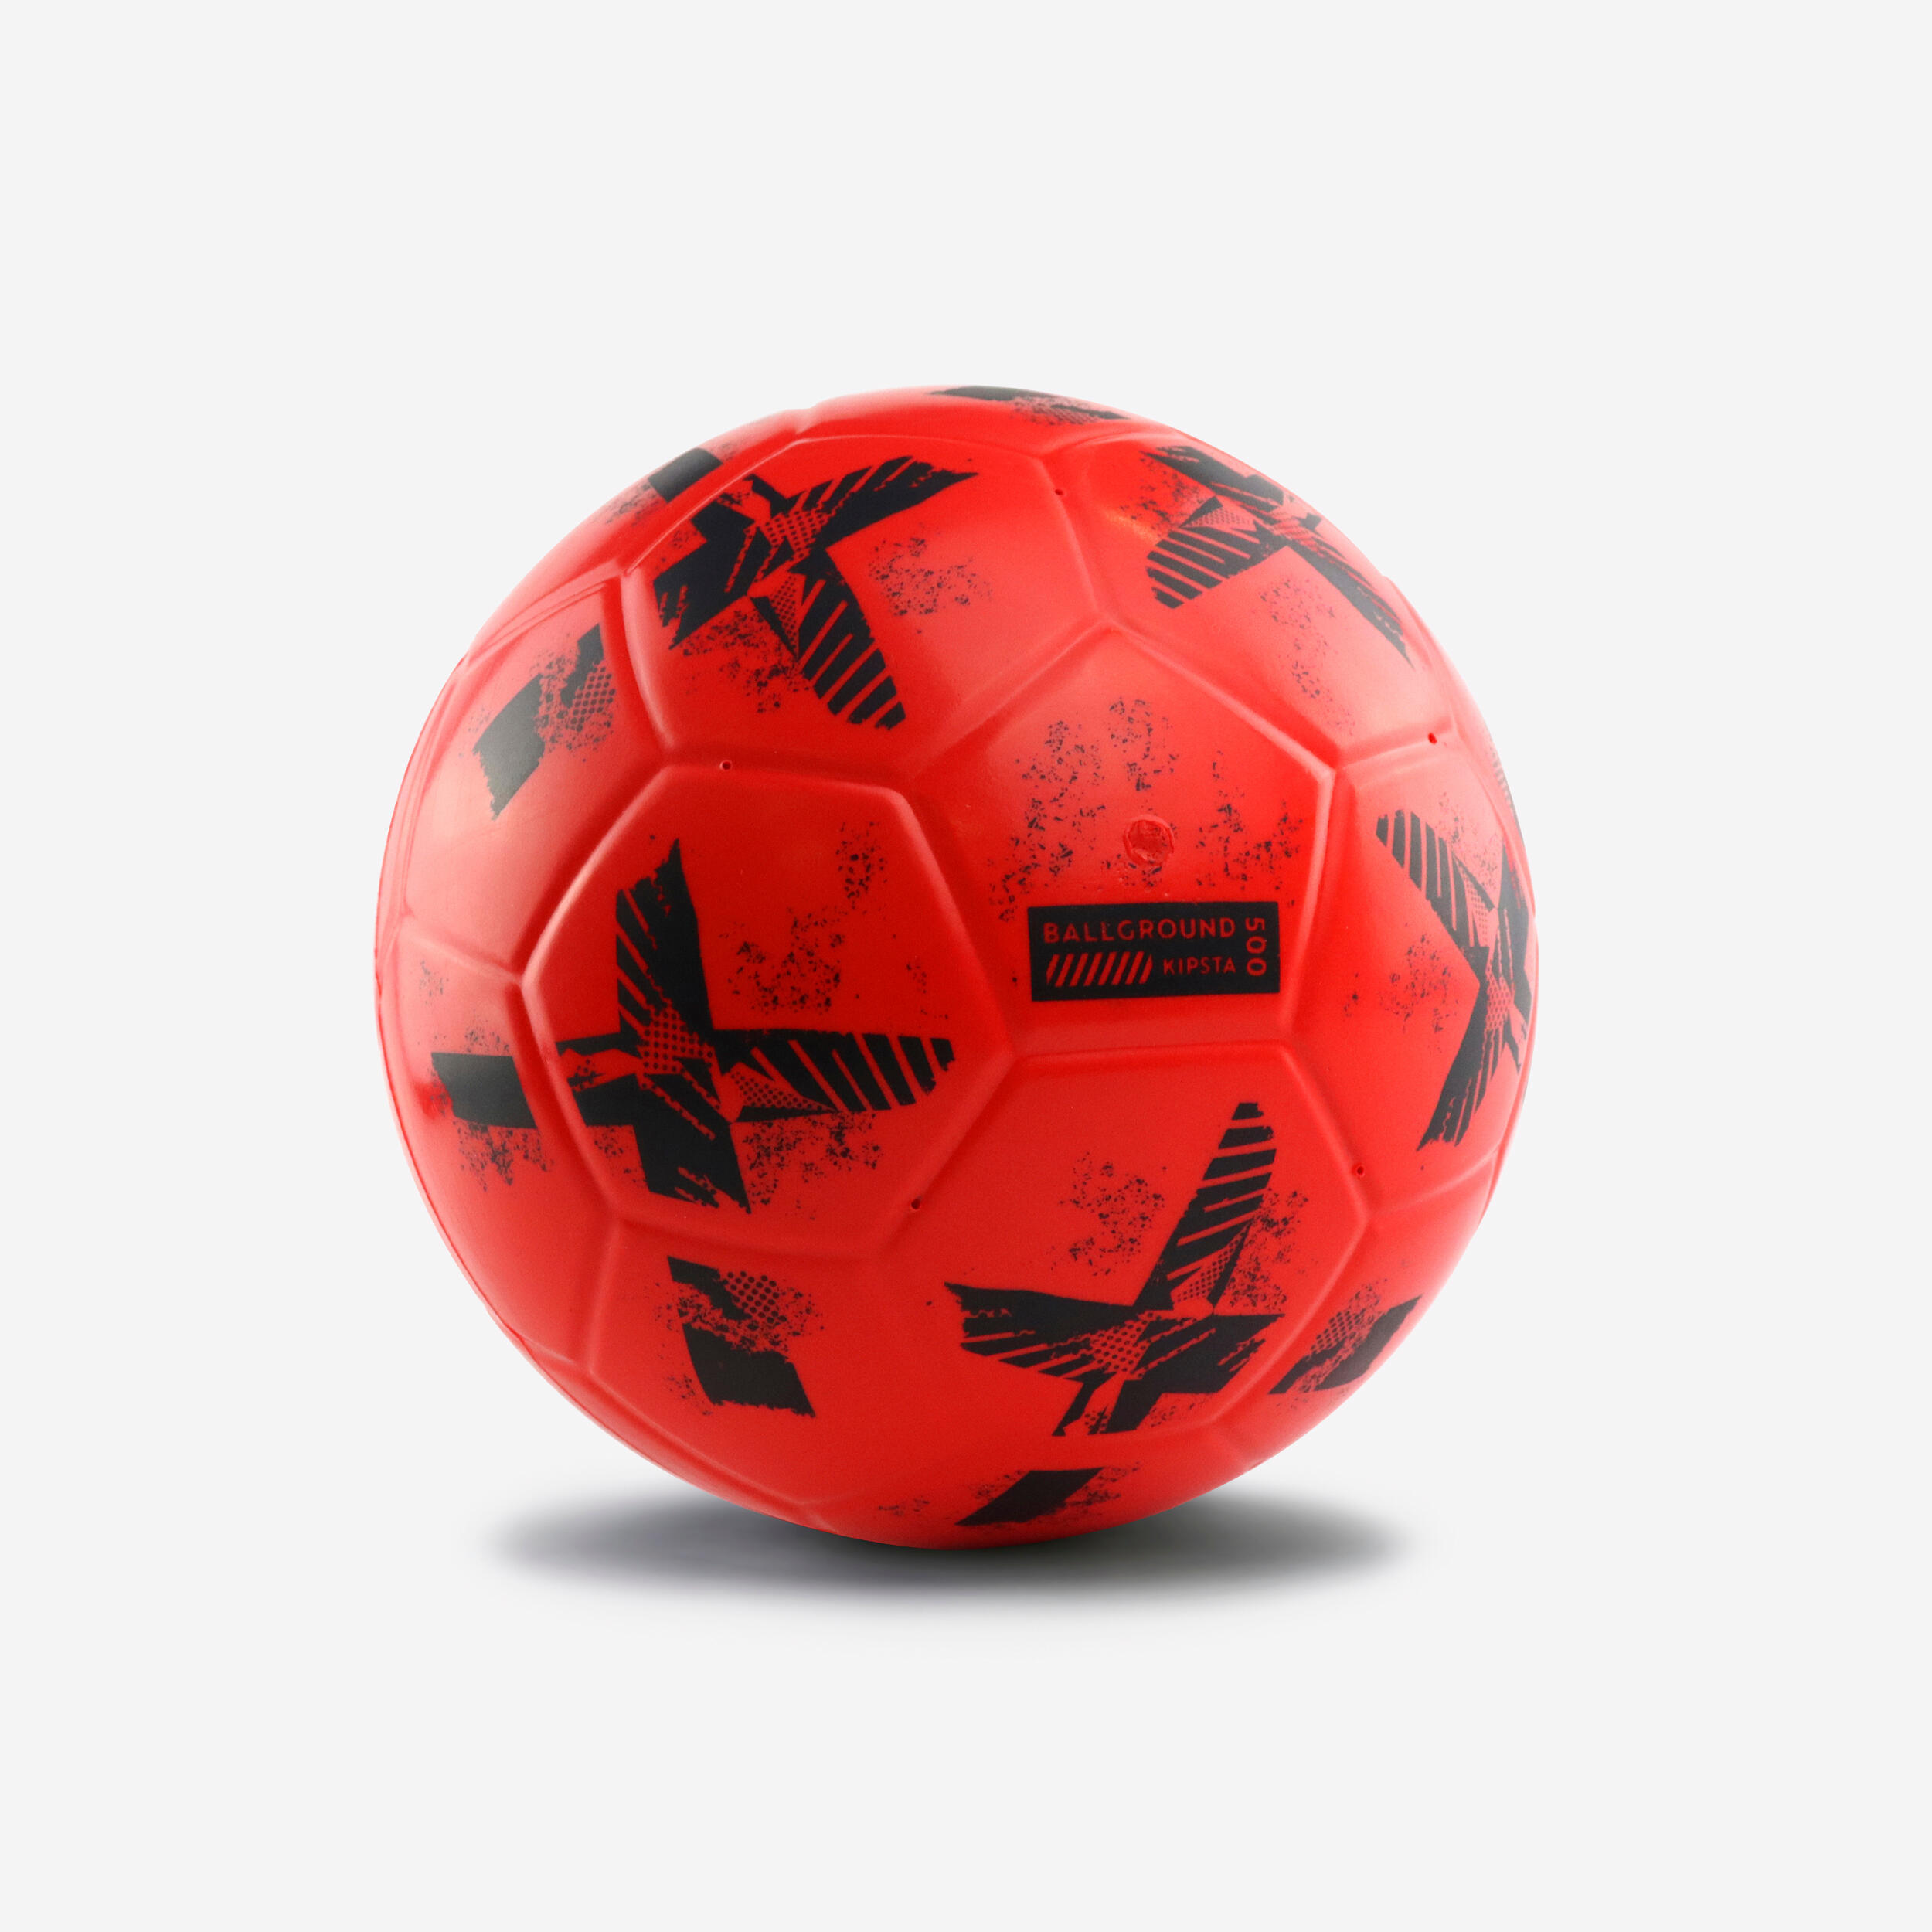 KIPSTA Ballon De Football En Mousse Ballground 500 T4 Rouge Et Noir -